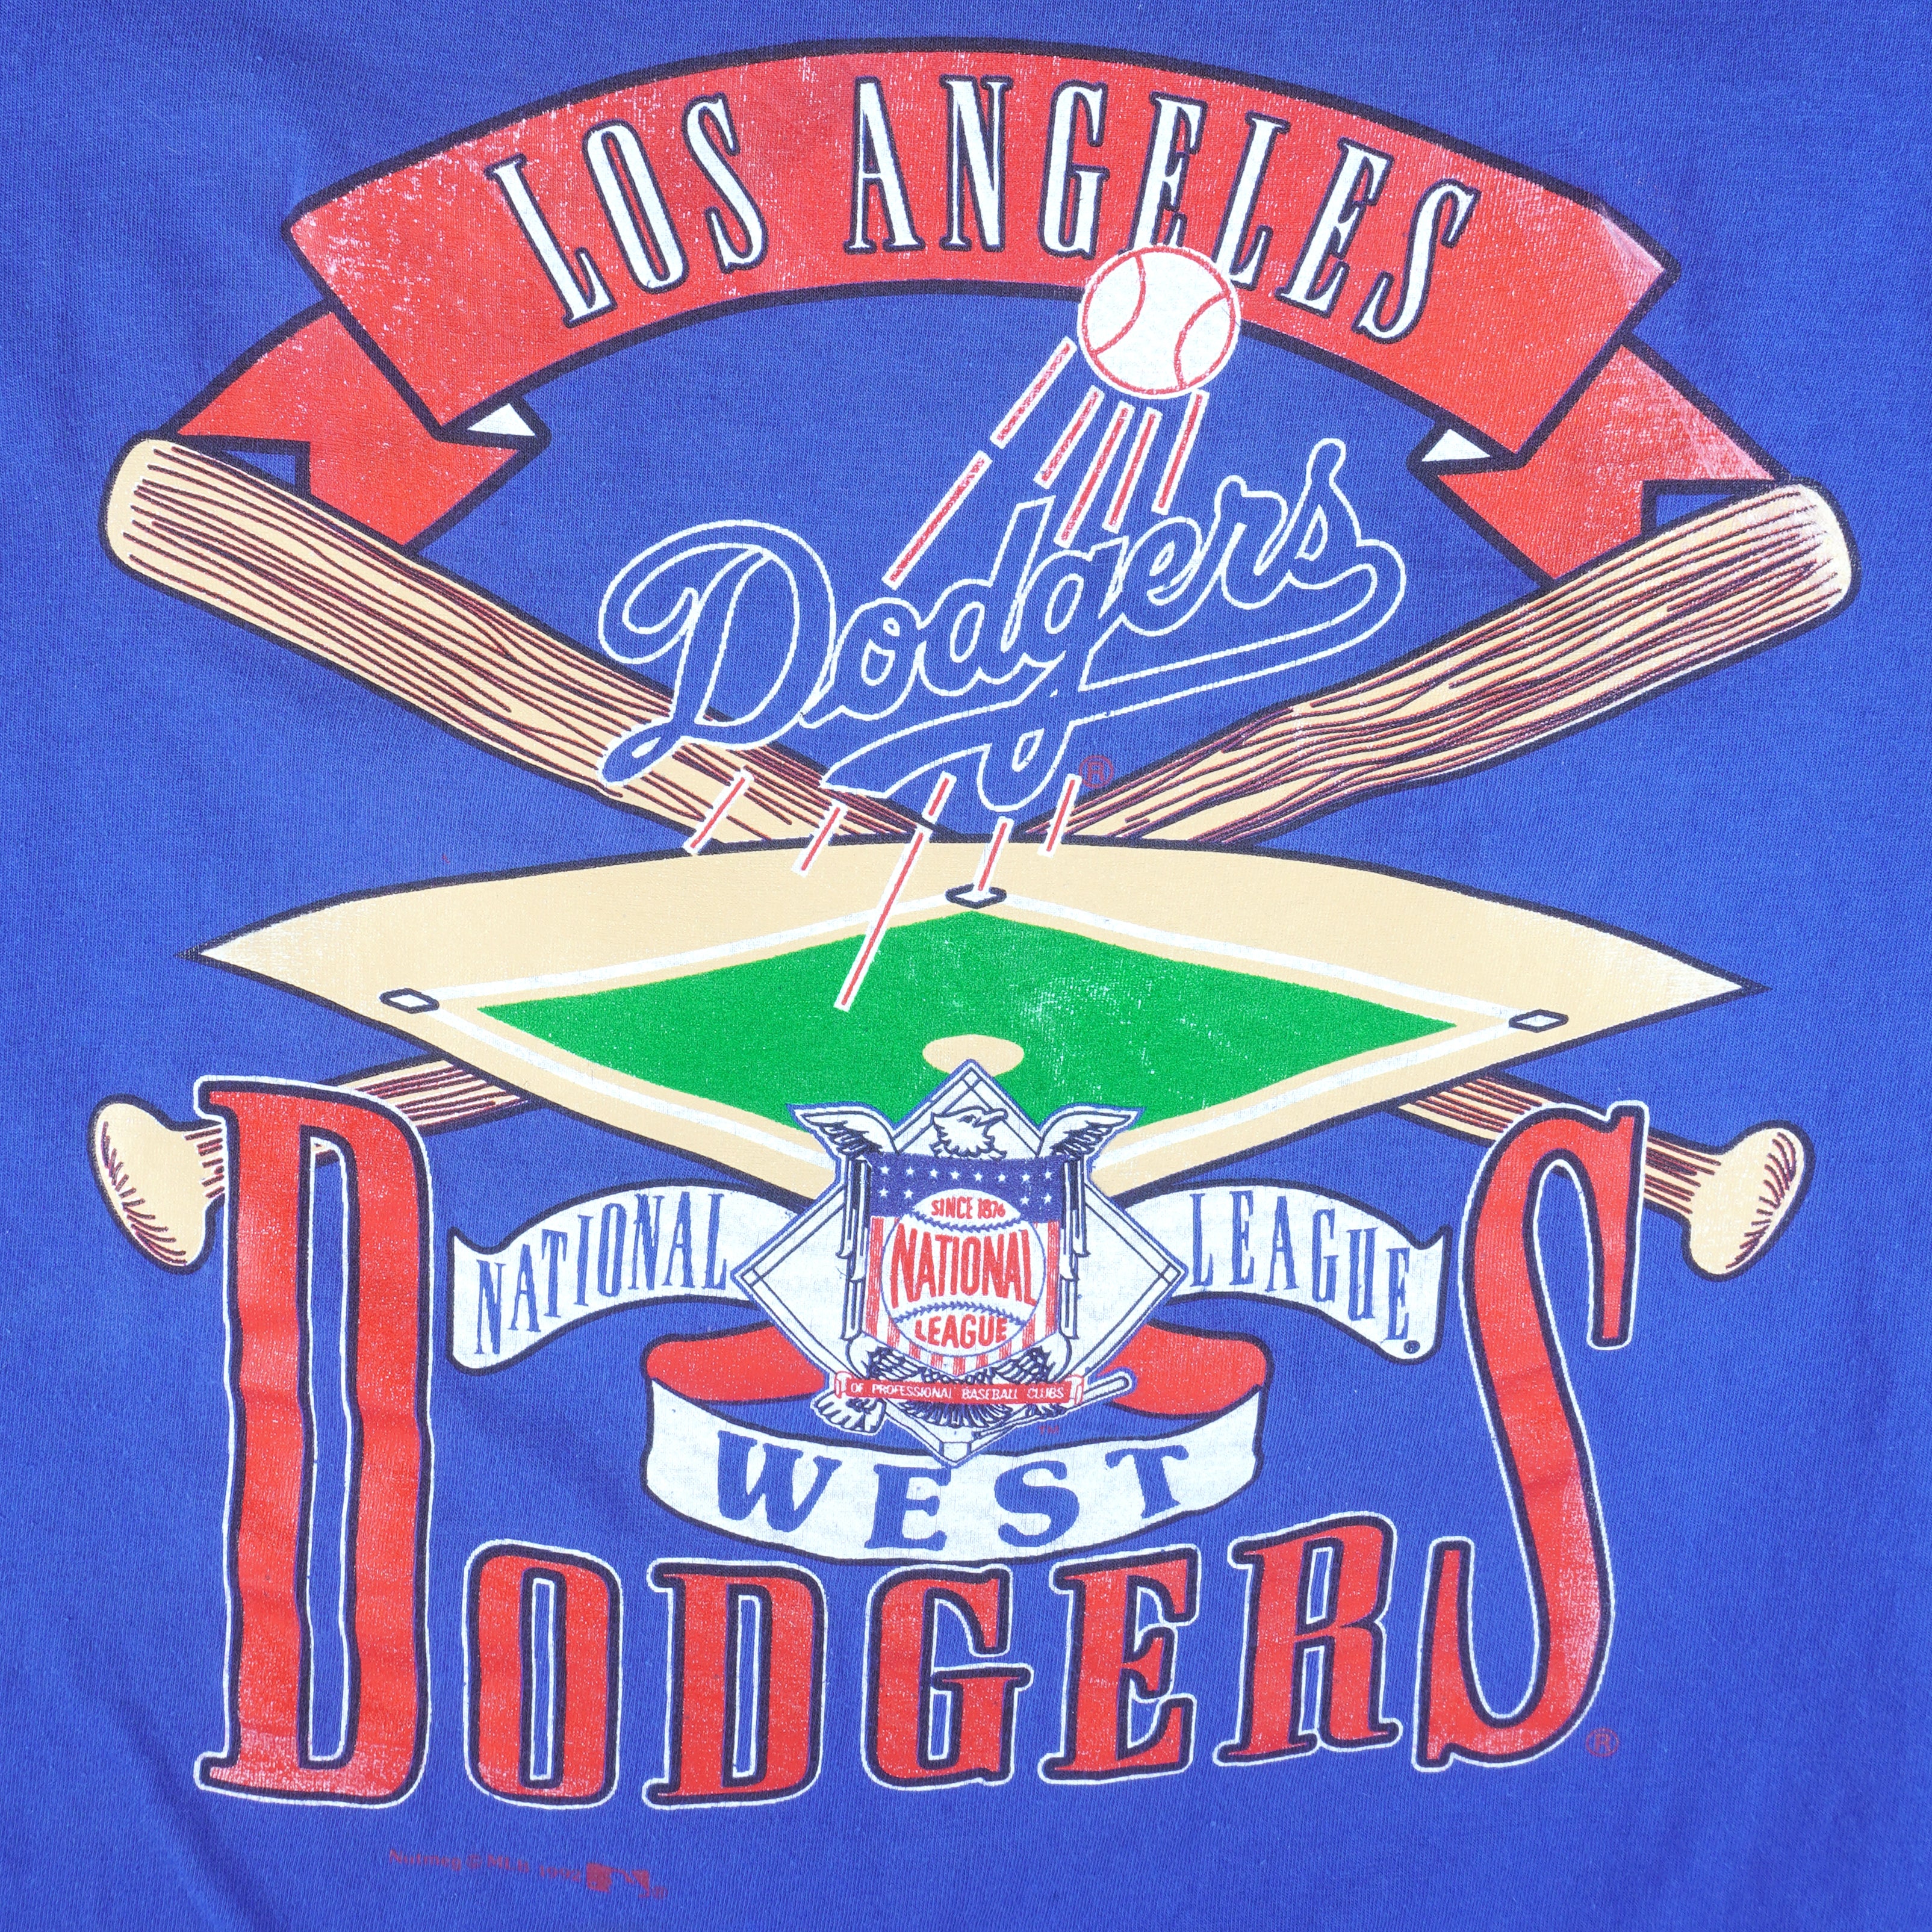 Dodgers T-shirt 1980s Vintage Baseball Tee 